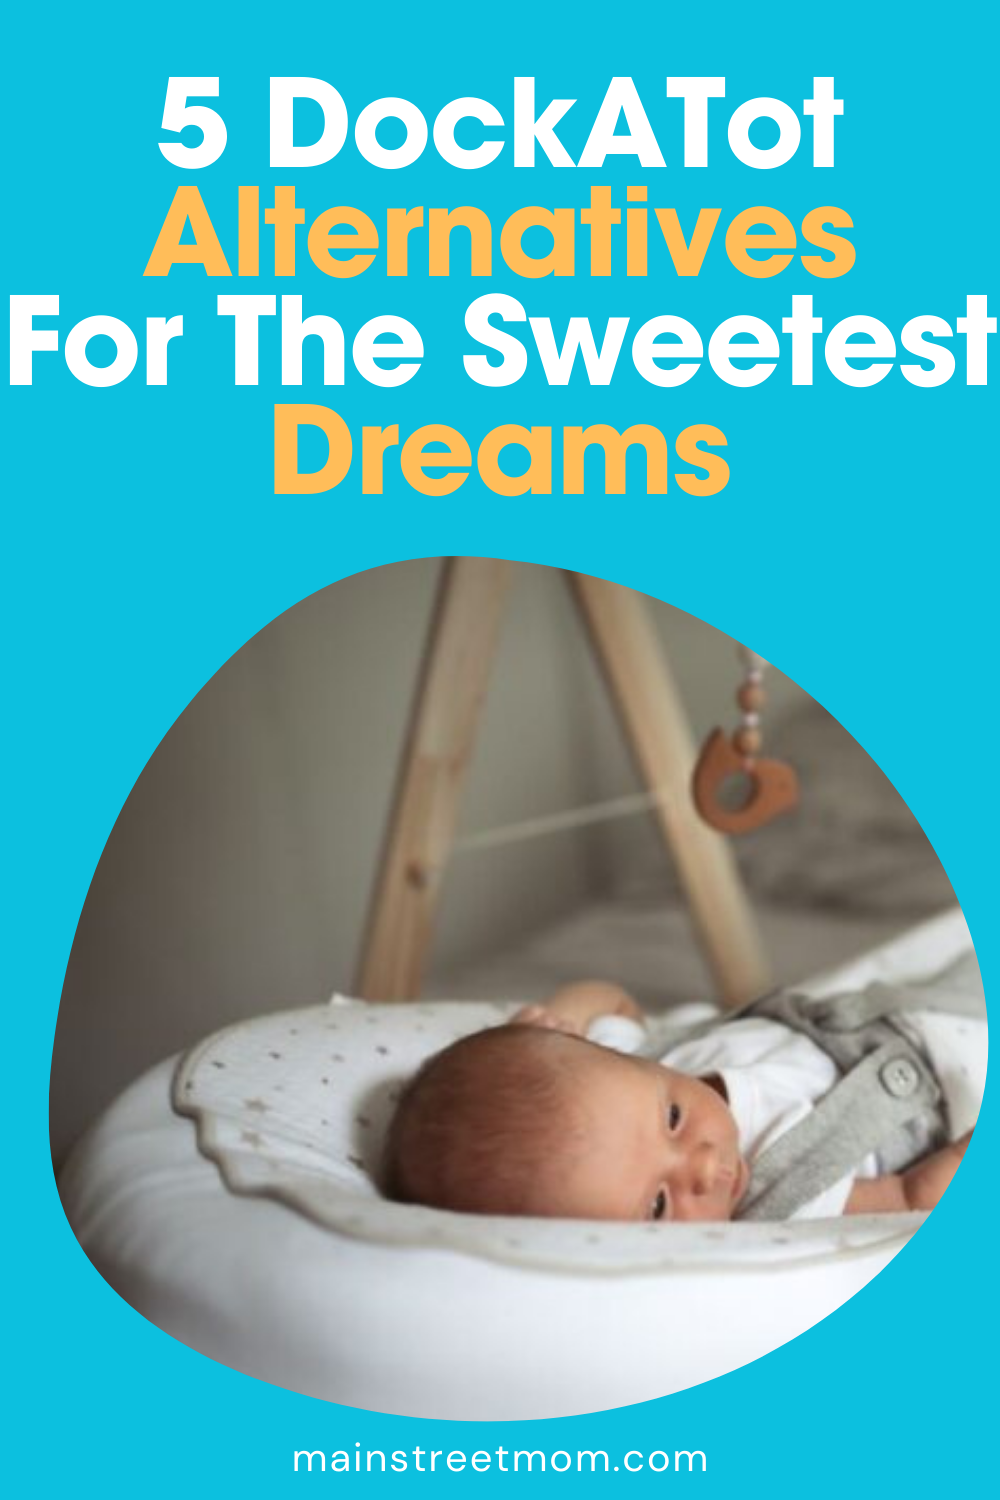 5 DockATot Alternatives For The Sweetest Dreams
